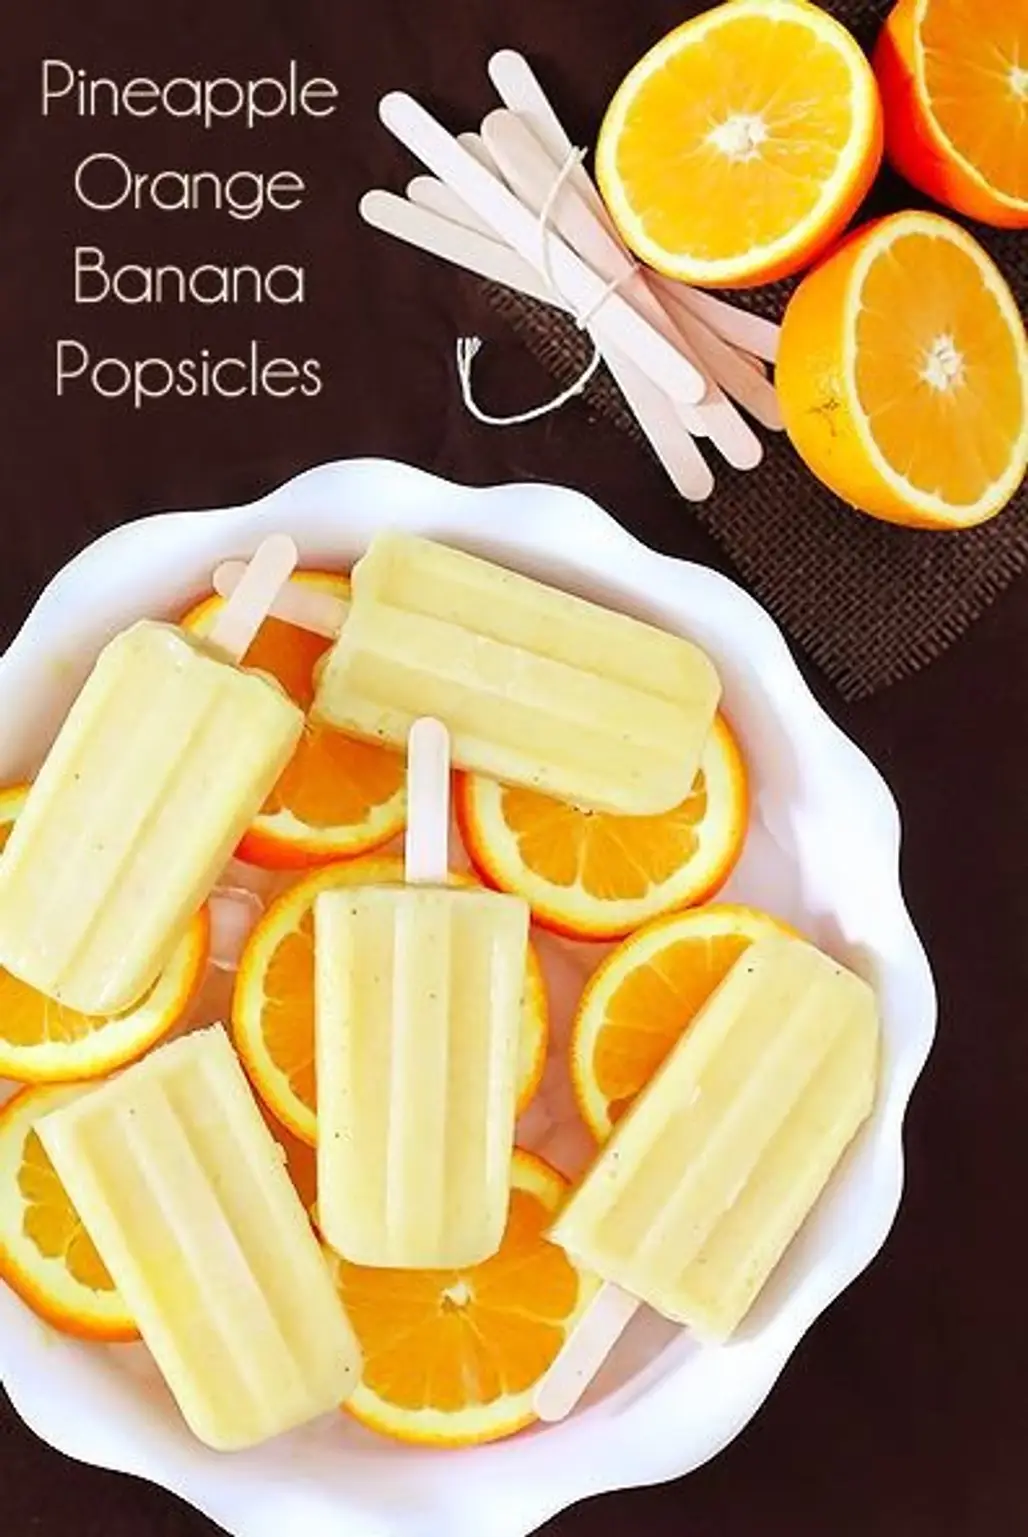 Pineapple Orange Banana Popsicles